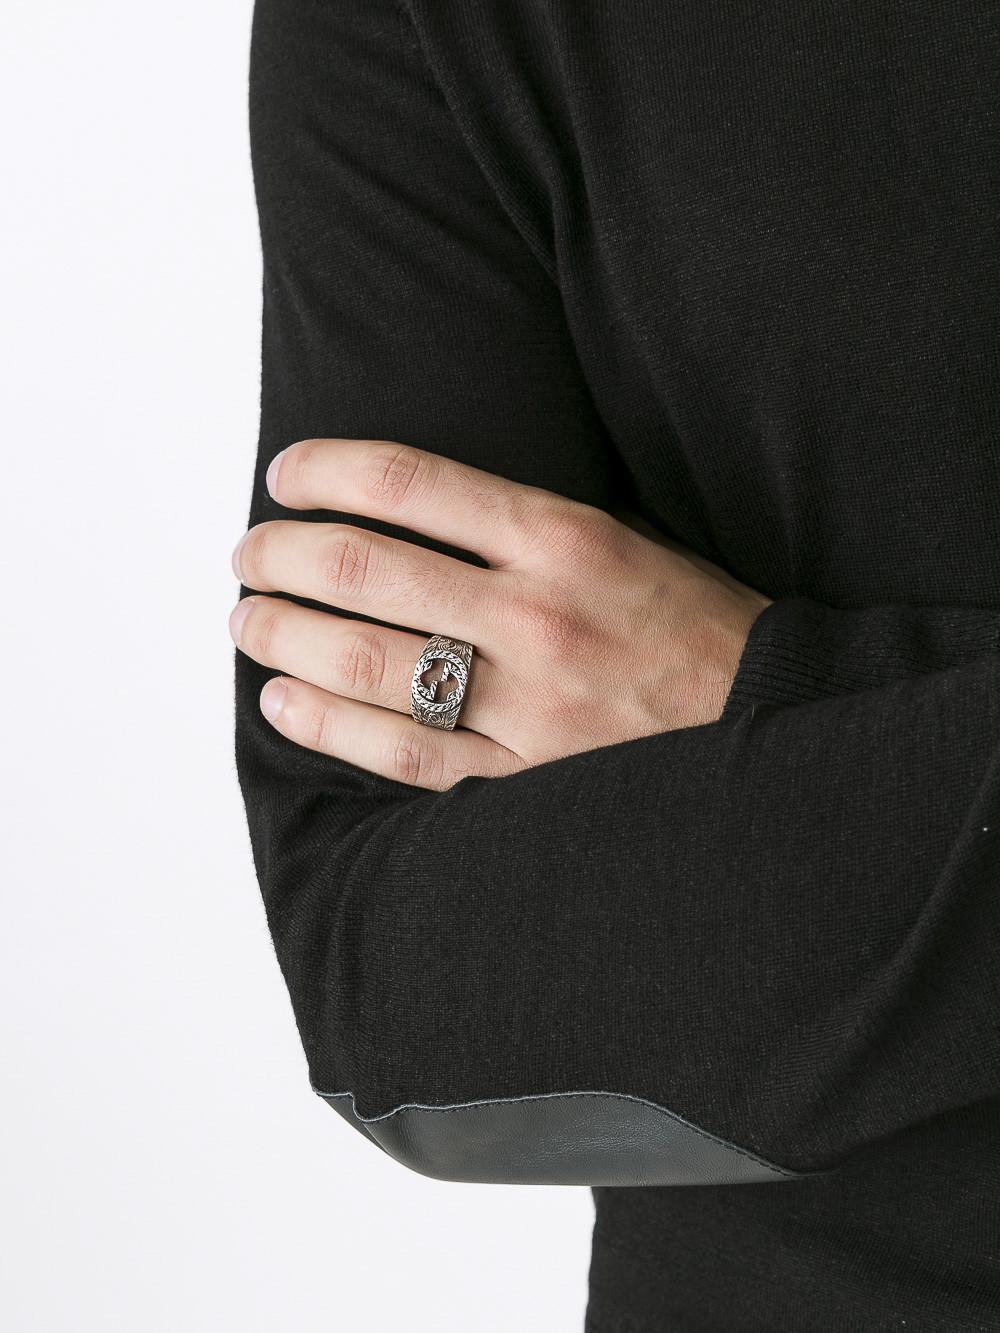 Gucci Interlocking G Ring in Metallic for Men - Lyst